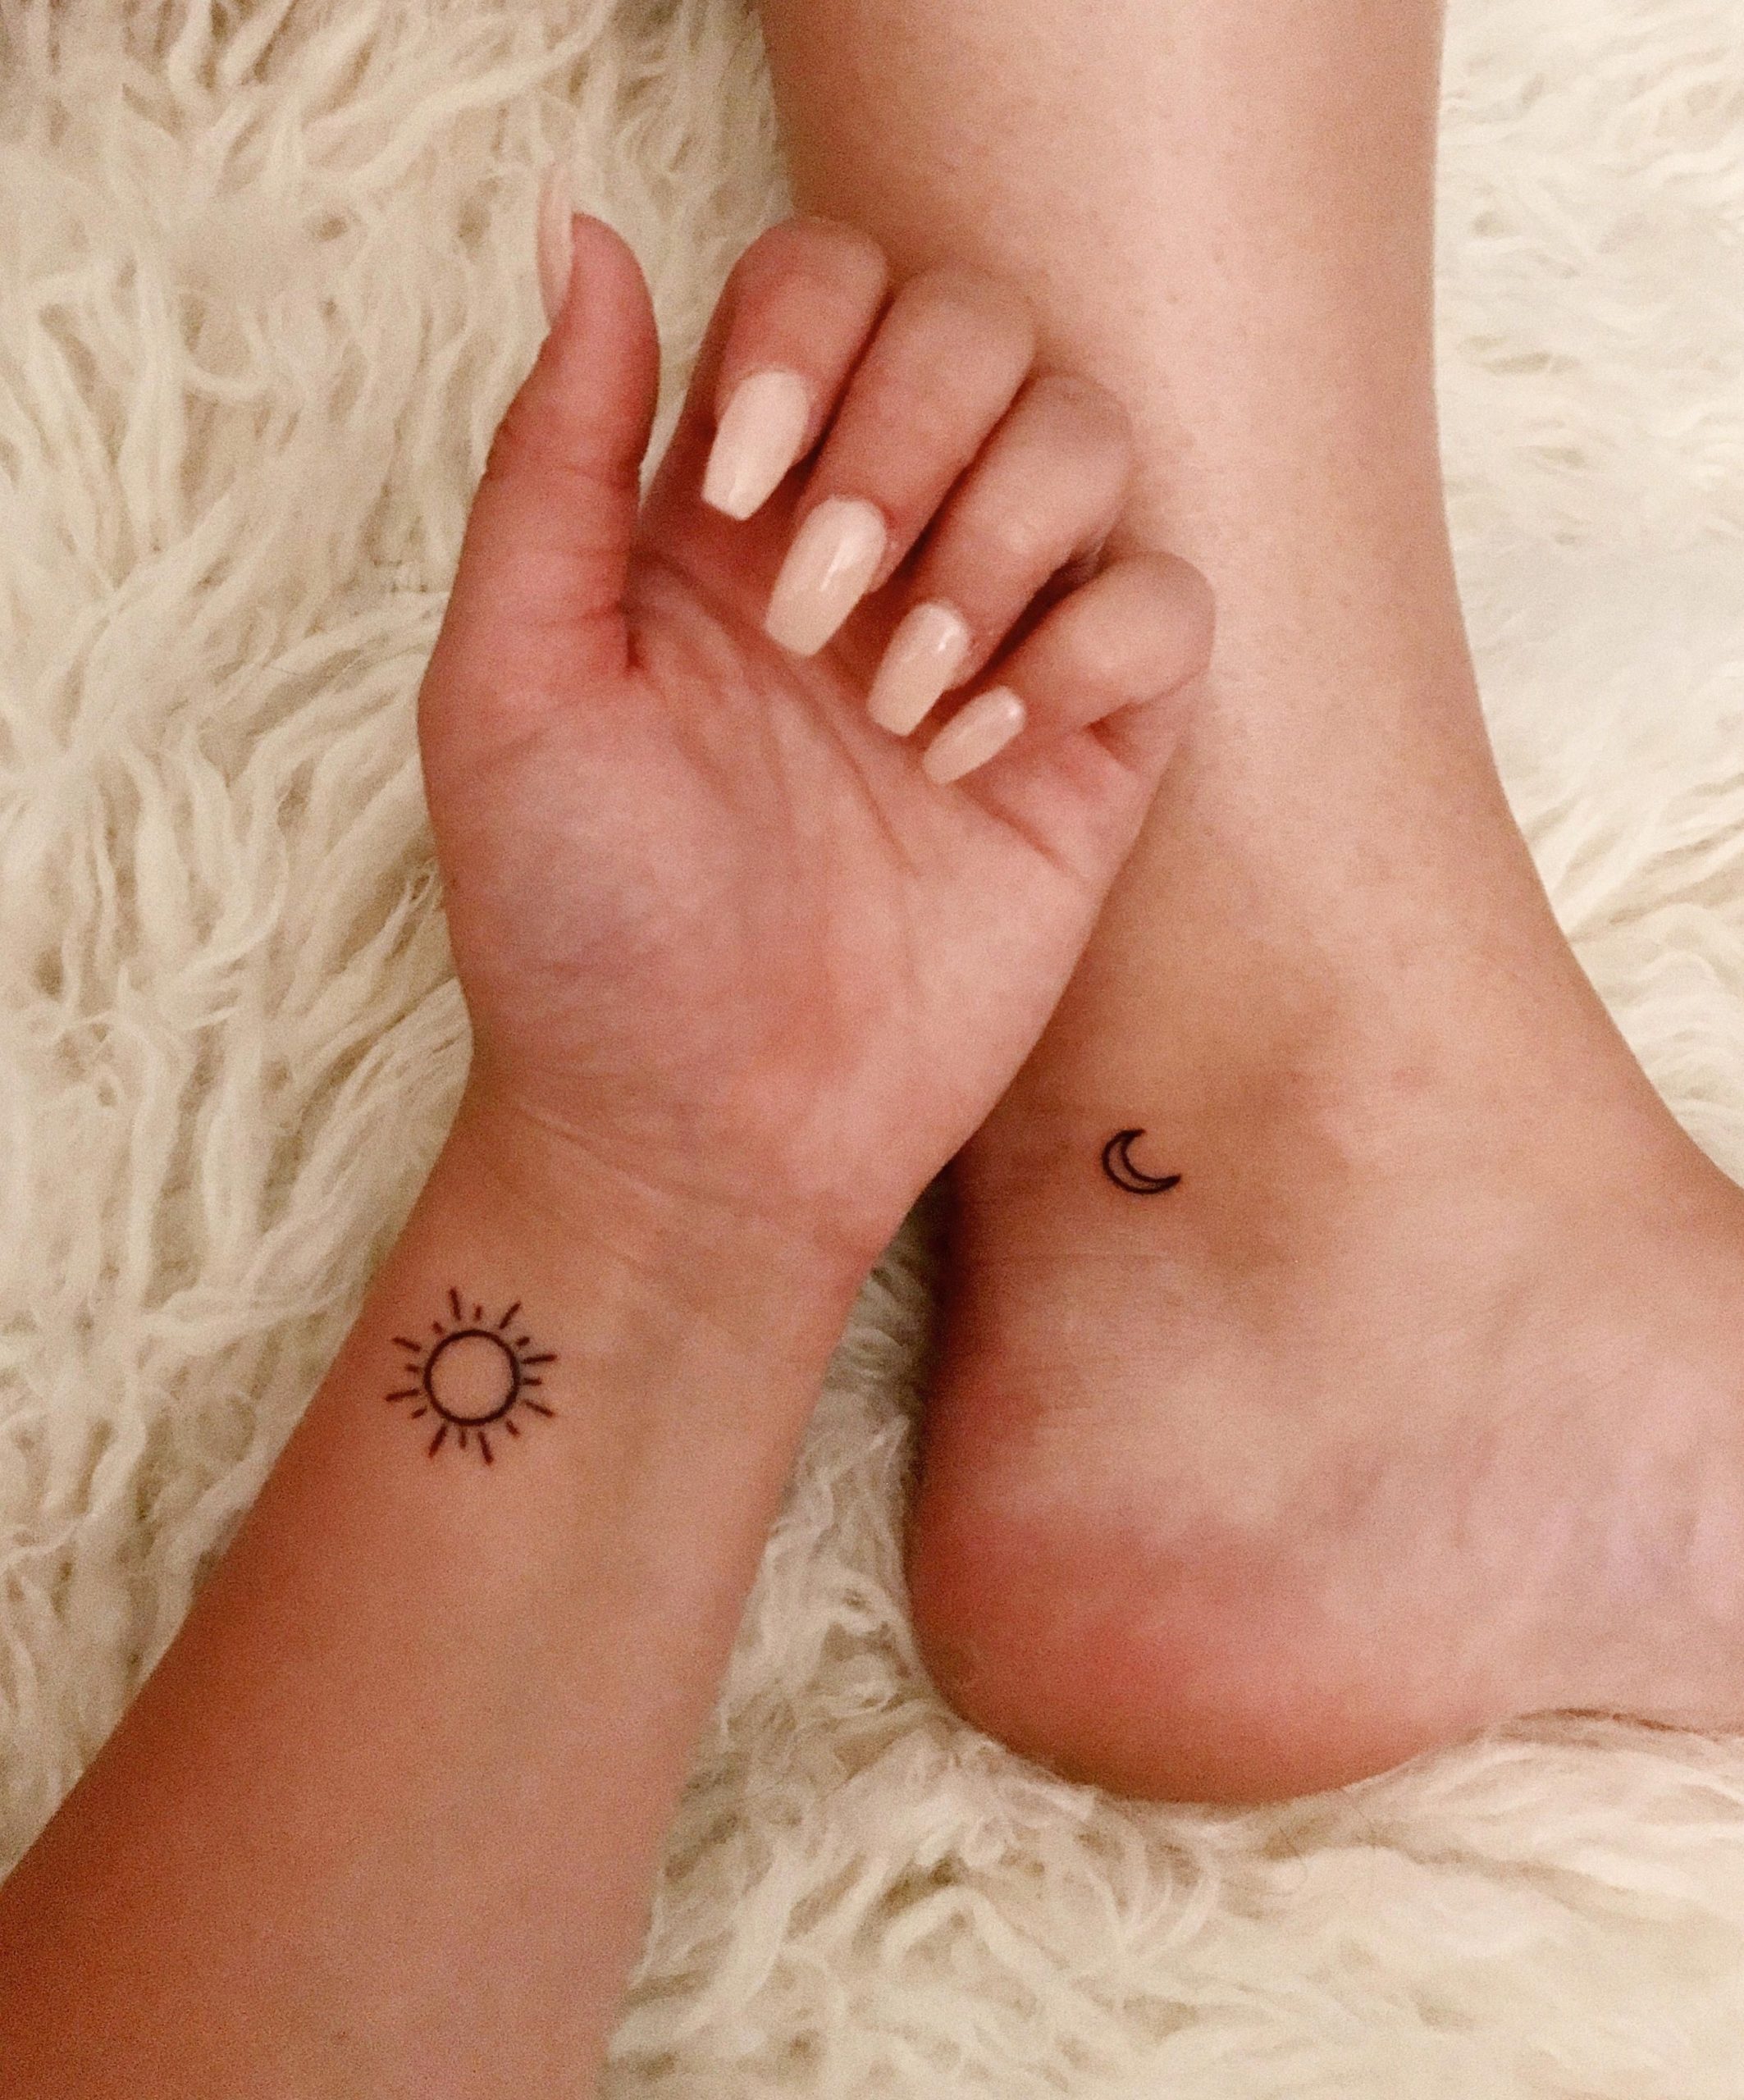 tatuajes minimalistas 2 18 - 25 Ideas de Tatuajes Minimalistas para inspirar tu primer tatuaje